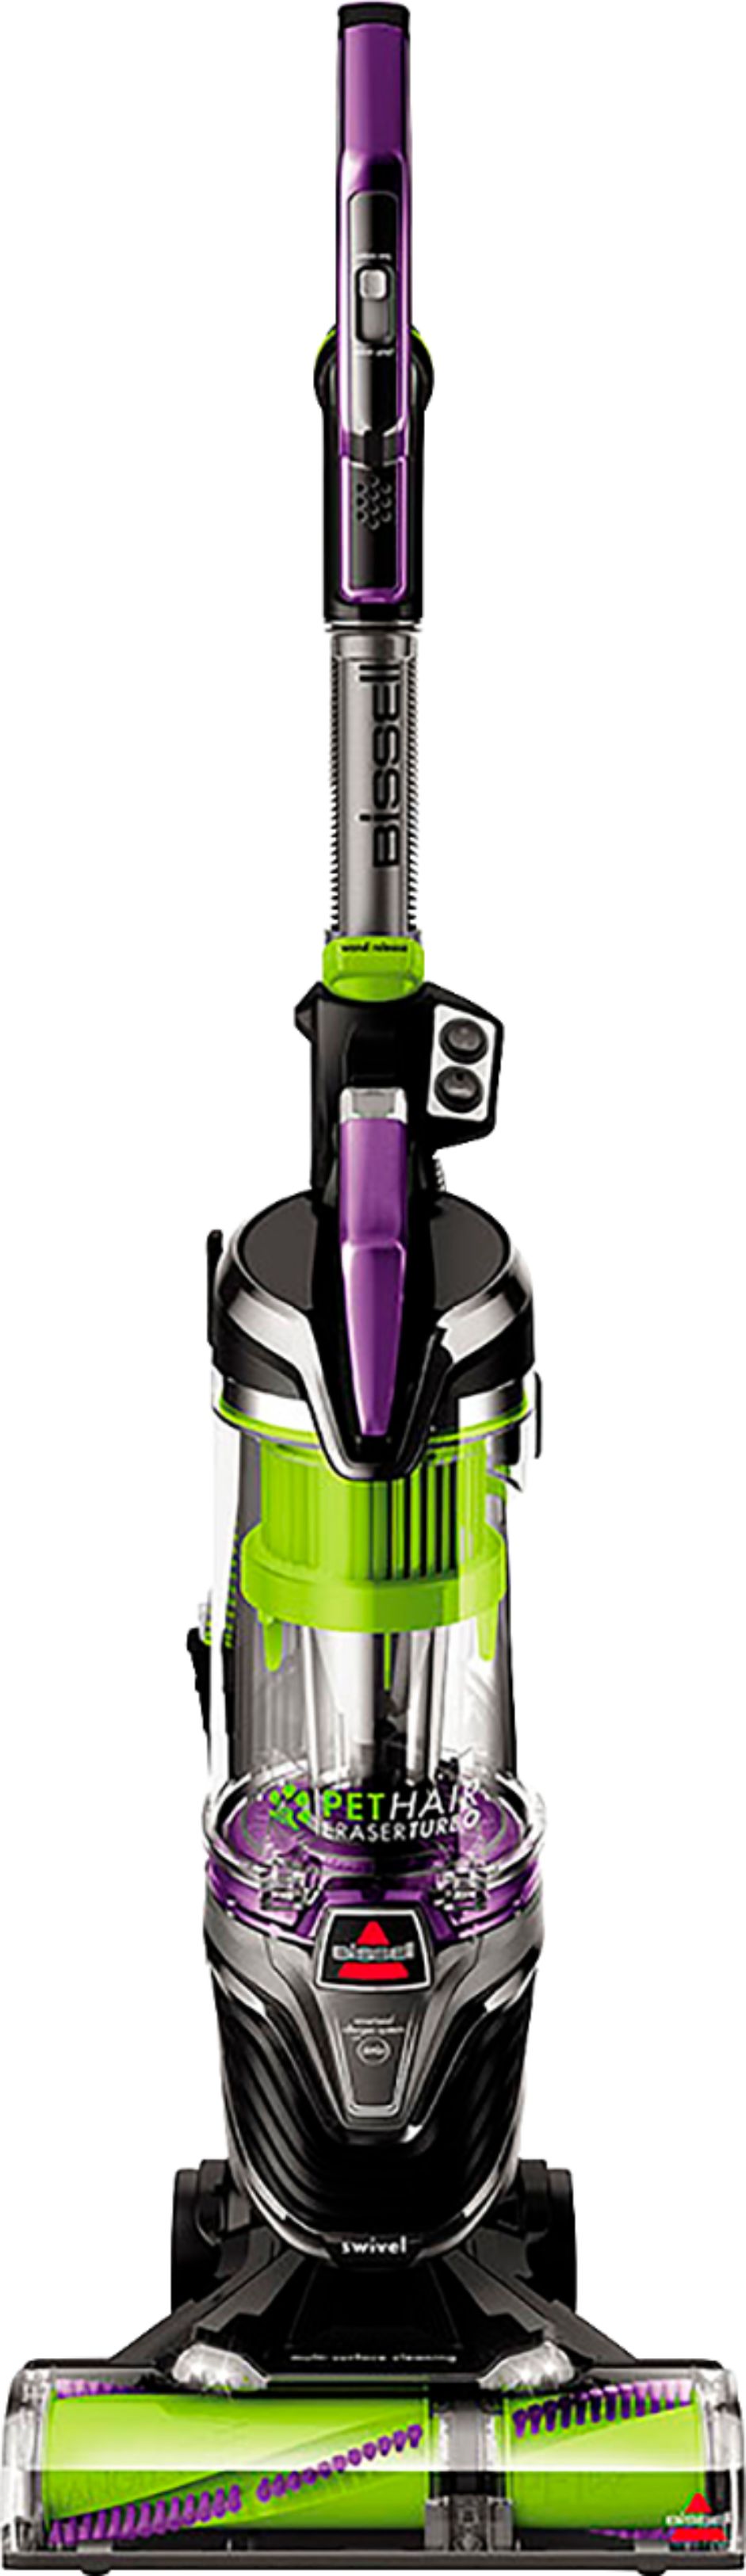 BISSELL - Pet Hair Eraser Turbo Upright Vacuum - Grapevine Purple/Electric Green/Black